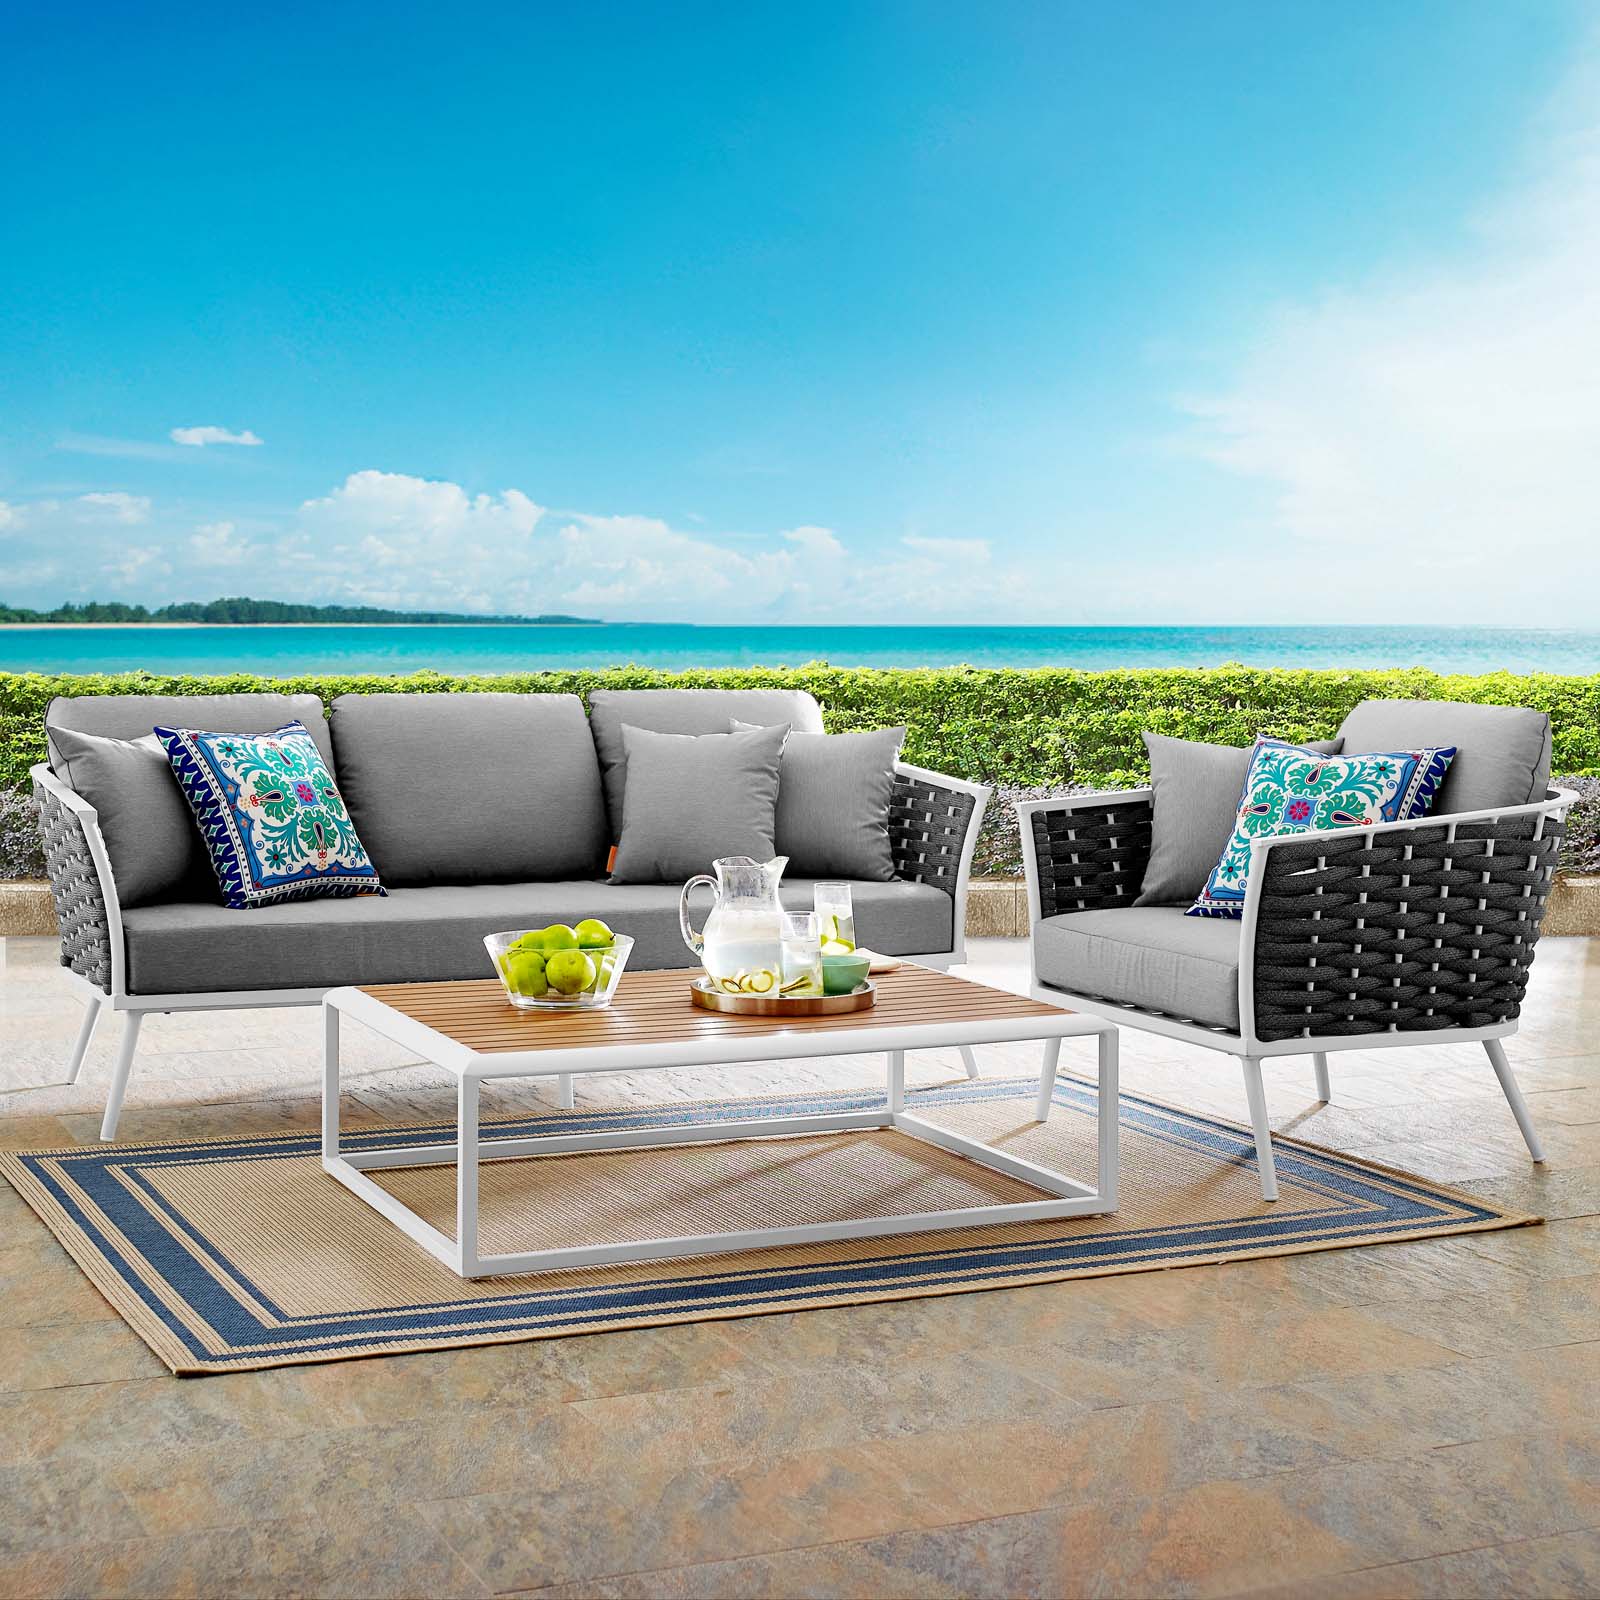 Modern Contemporary Urban Outdoor Patio Balcony Garden Furniture Lounge Chair, Sofa and Table Set, Fabric Aluminium, White Grey Gray - image 2 of 8